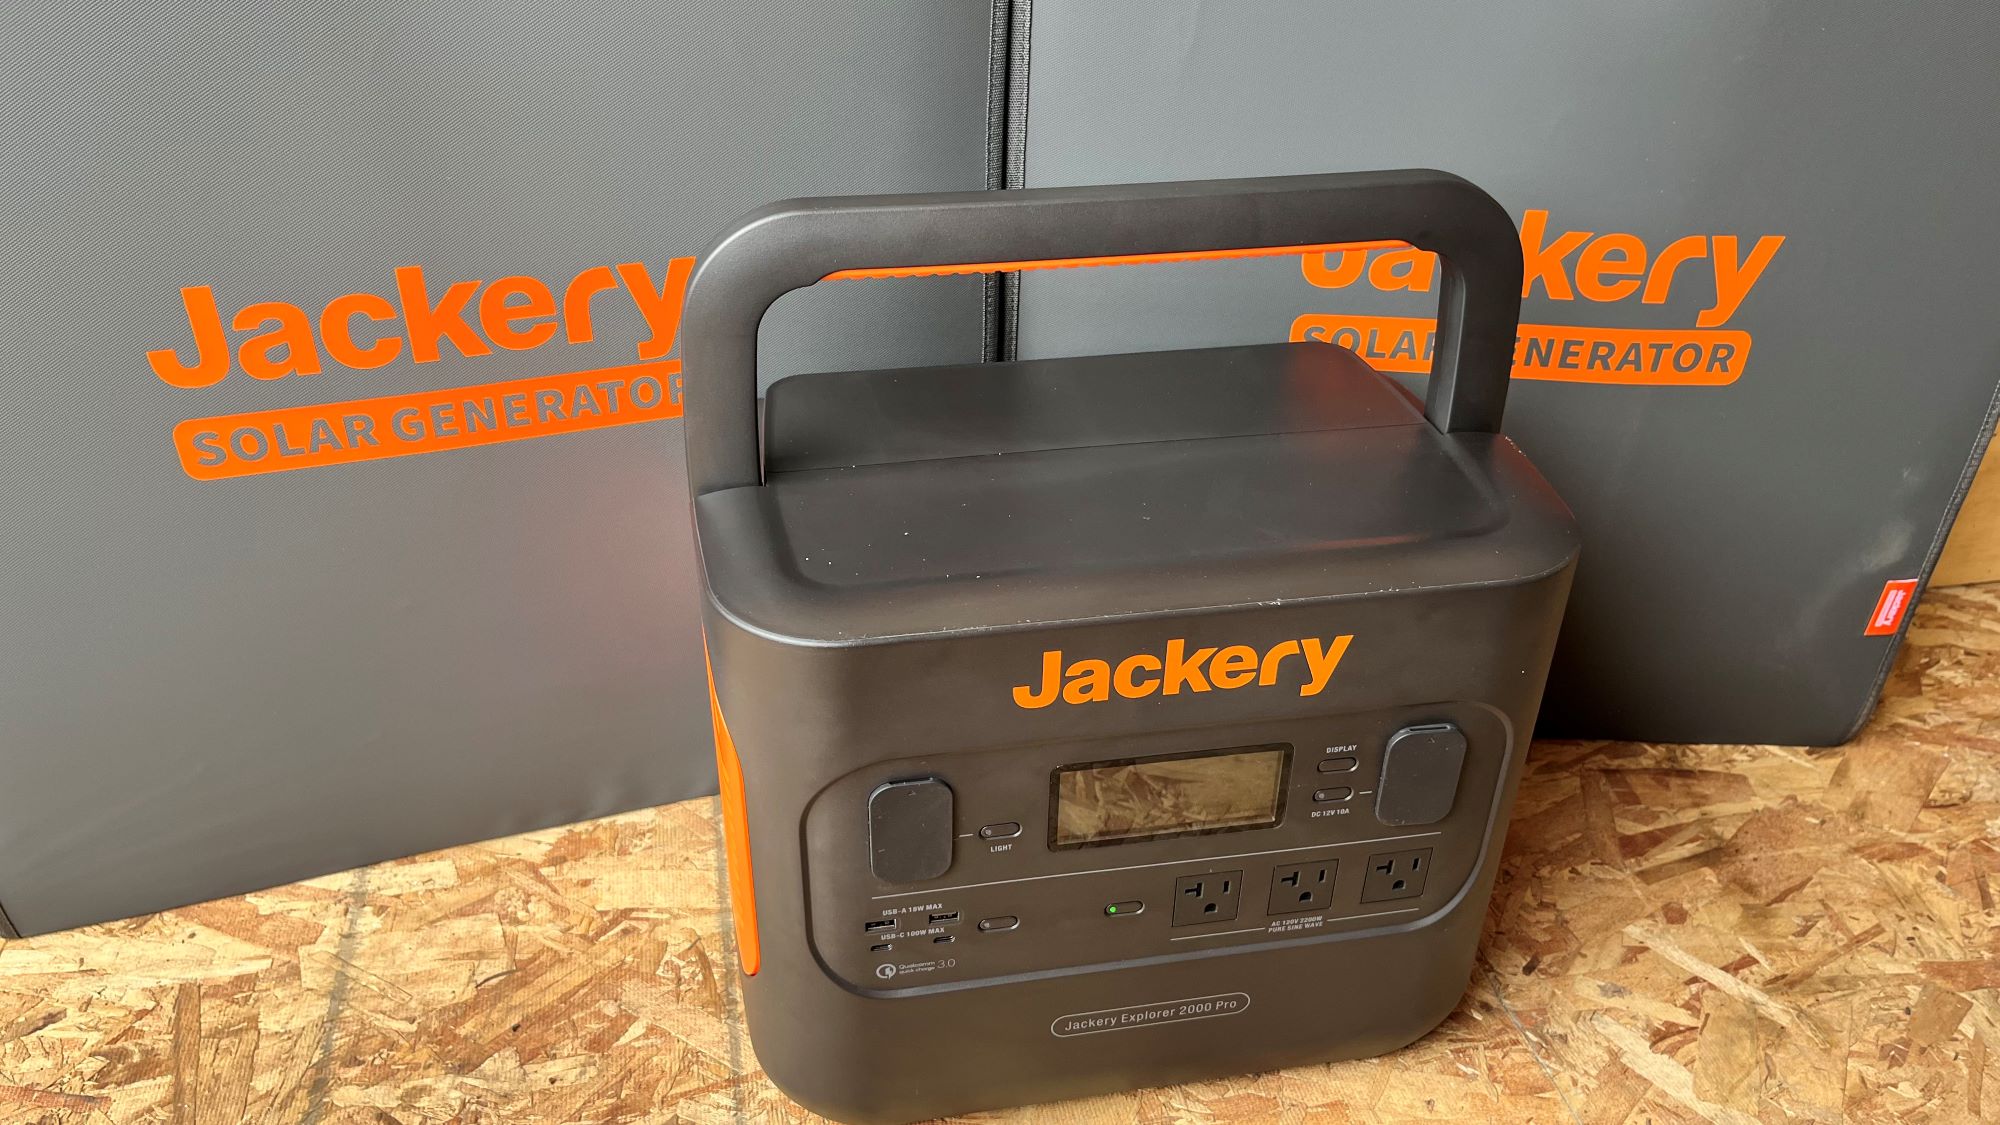 Jackery Solar Generator 2000 Pro Review